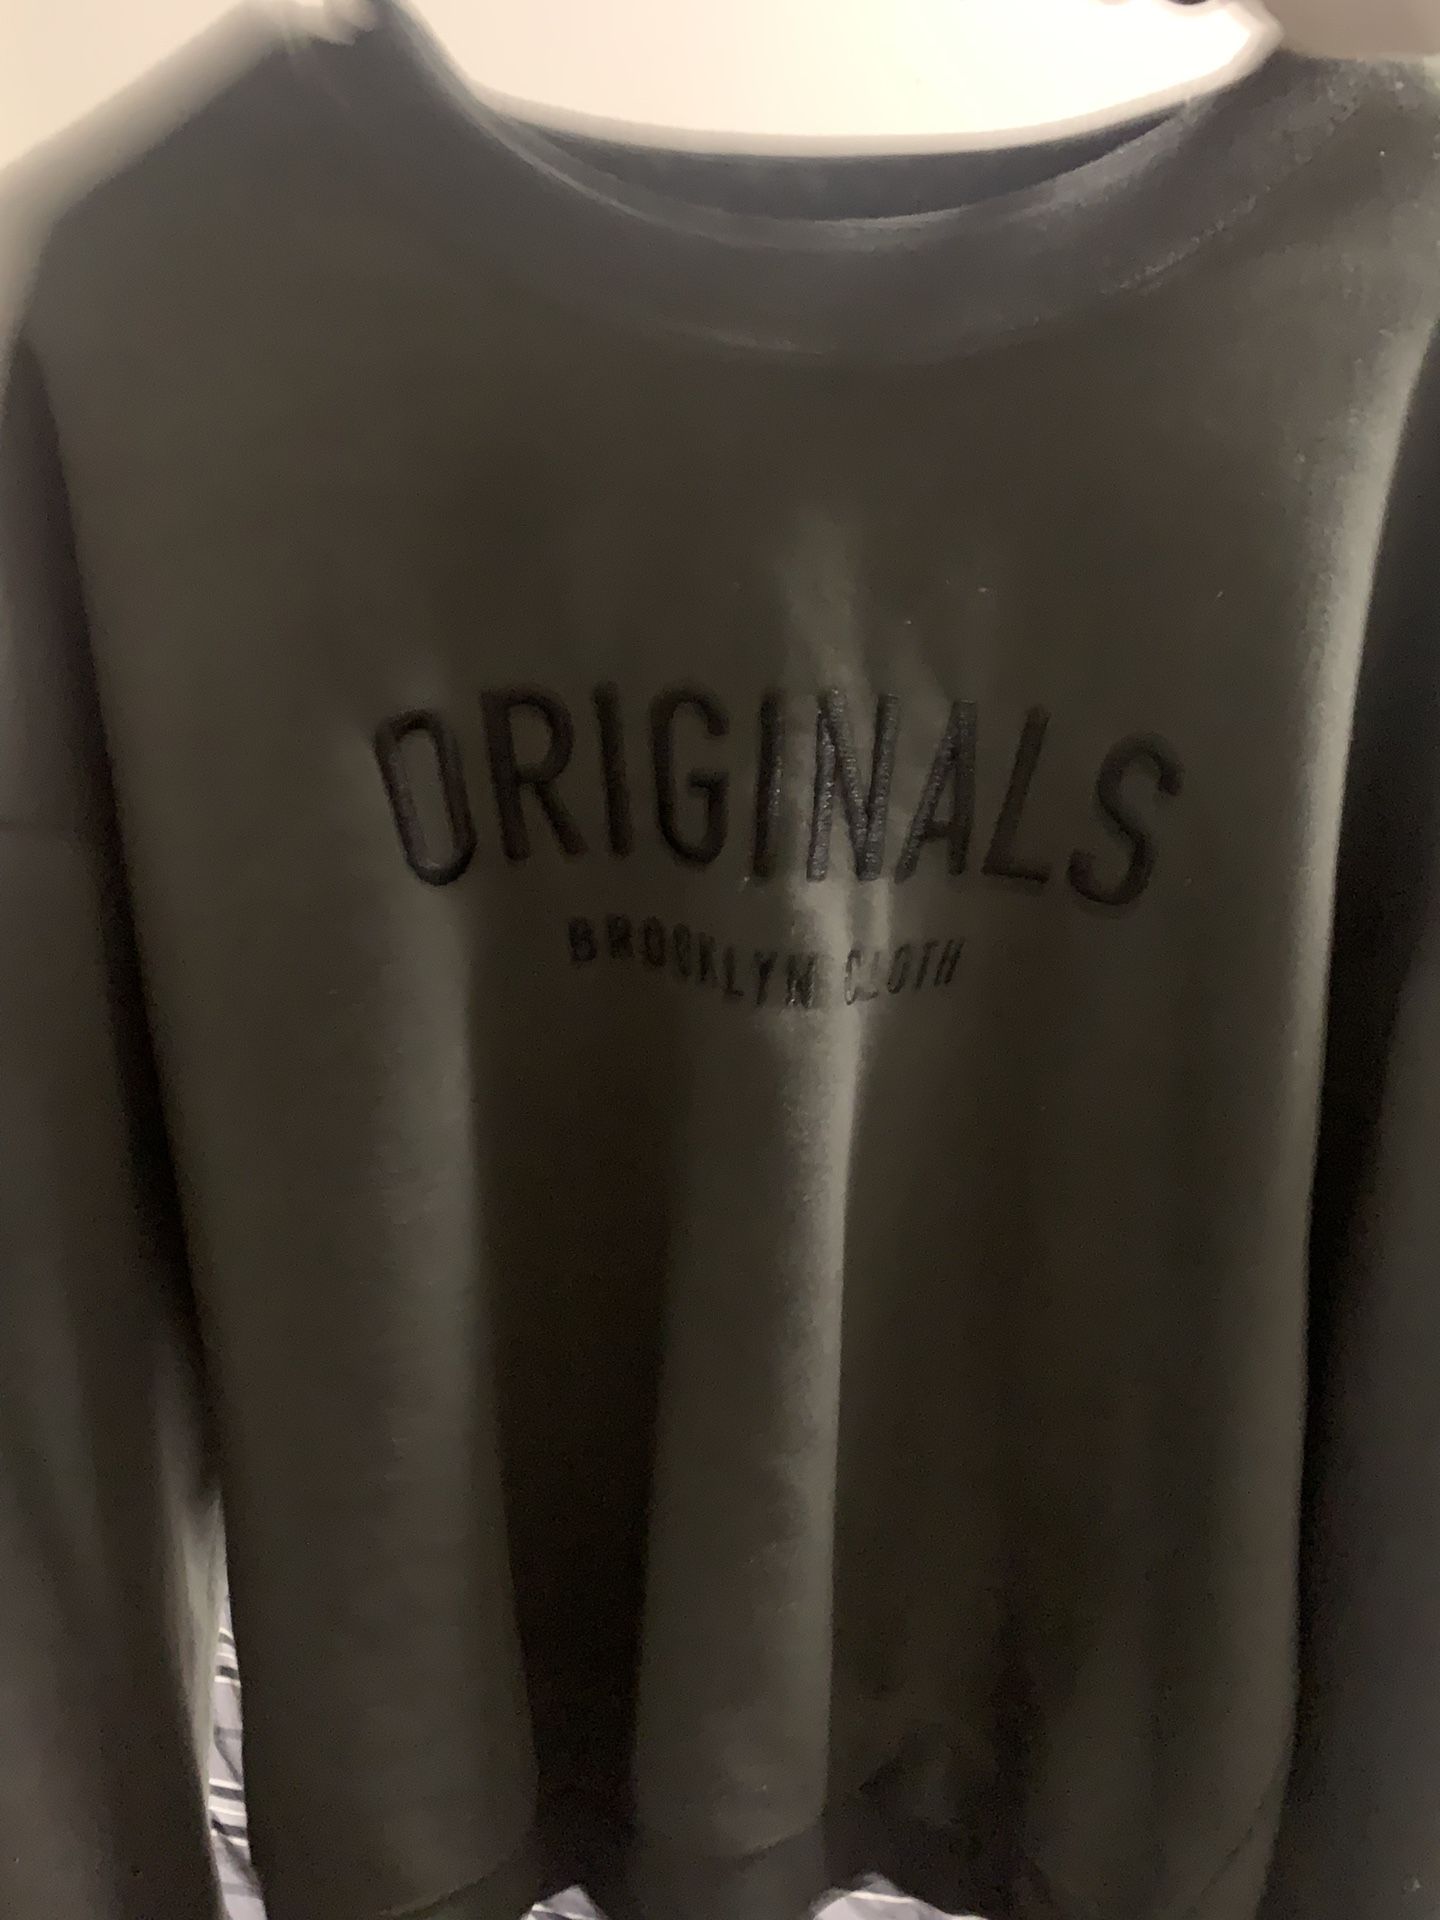 originals hoodie used once (washed)